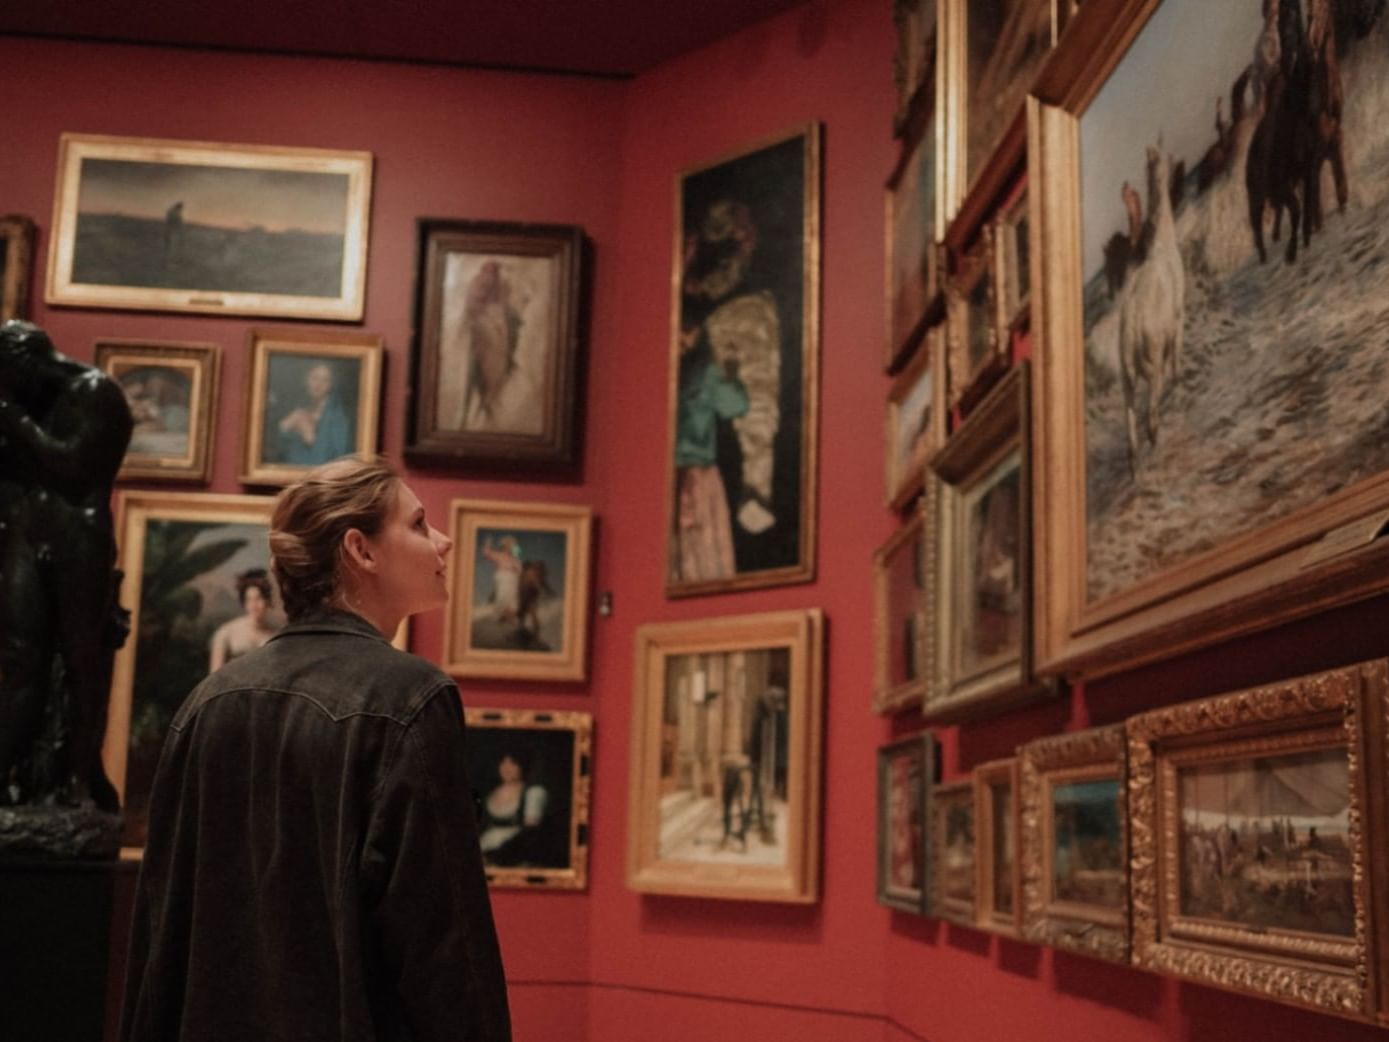 Lady looking at paintings, New Orleans Museum, La Galerie Hotel